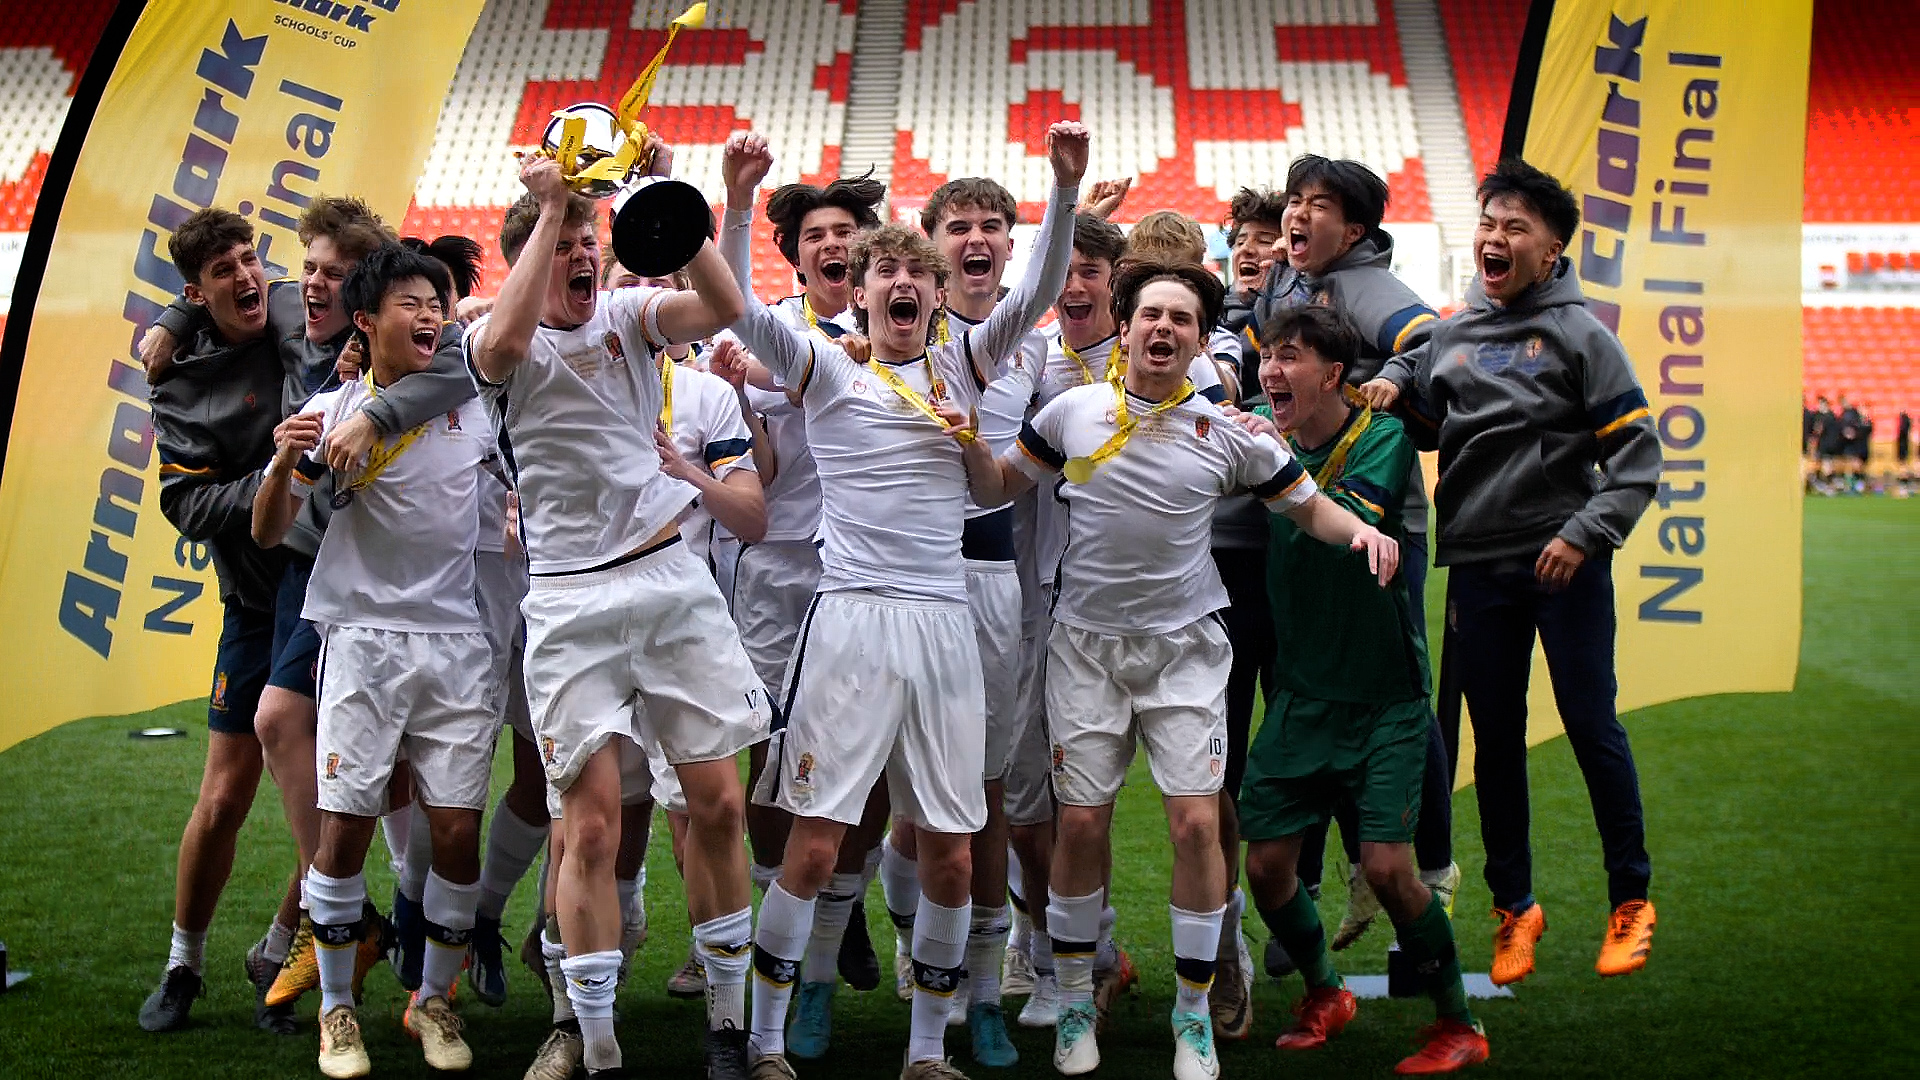 Shrewsbury School crowned ESFA U18 National Champions  